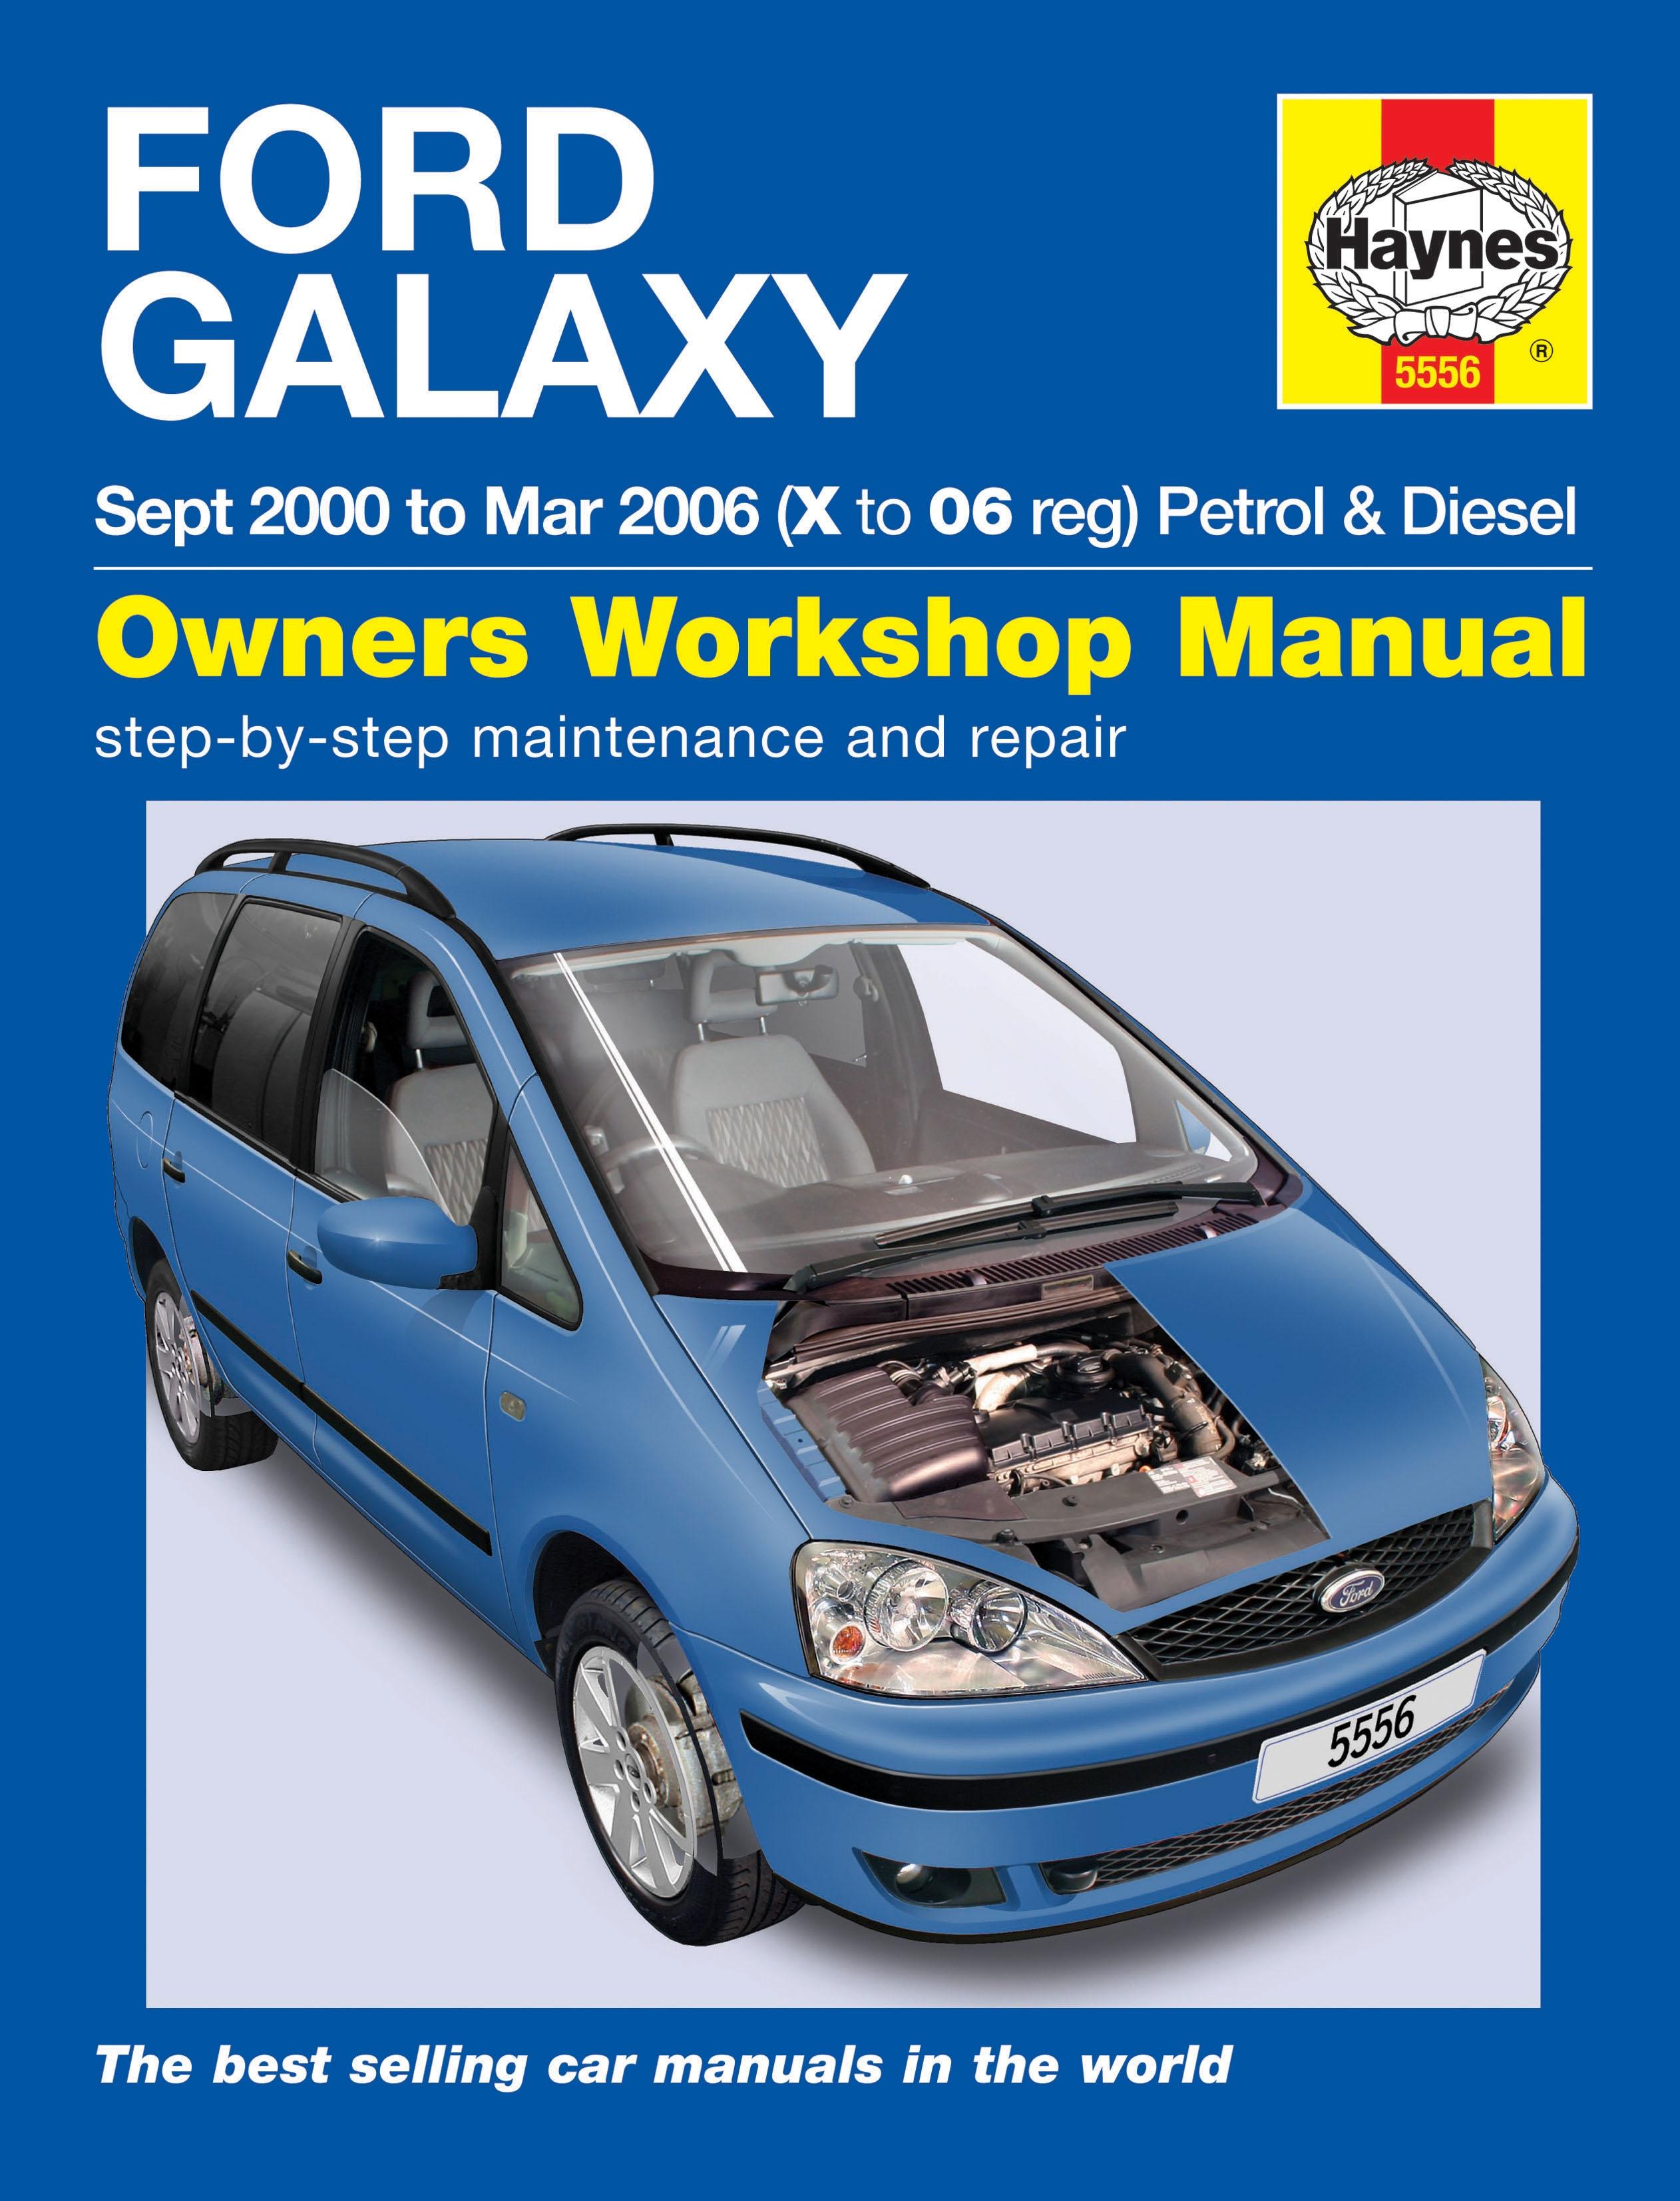 Ford galaxy haynes manual download #7